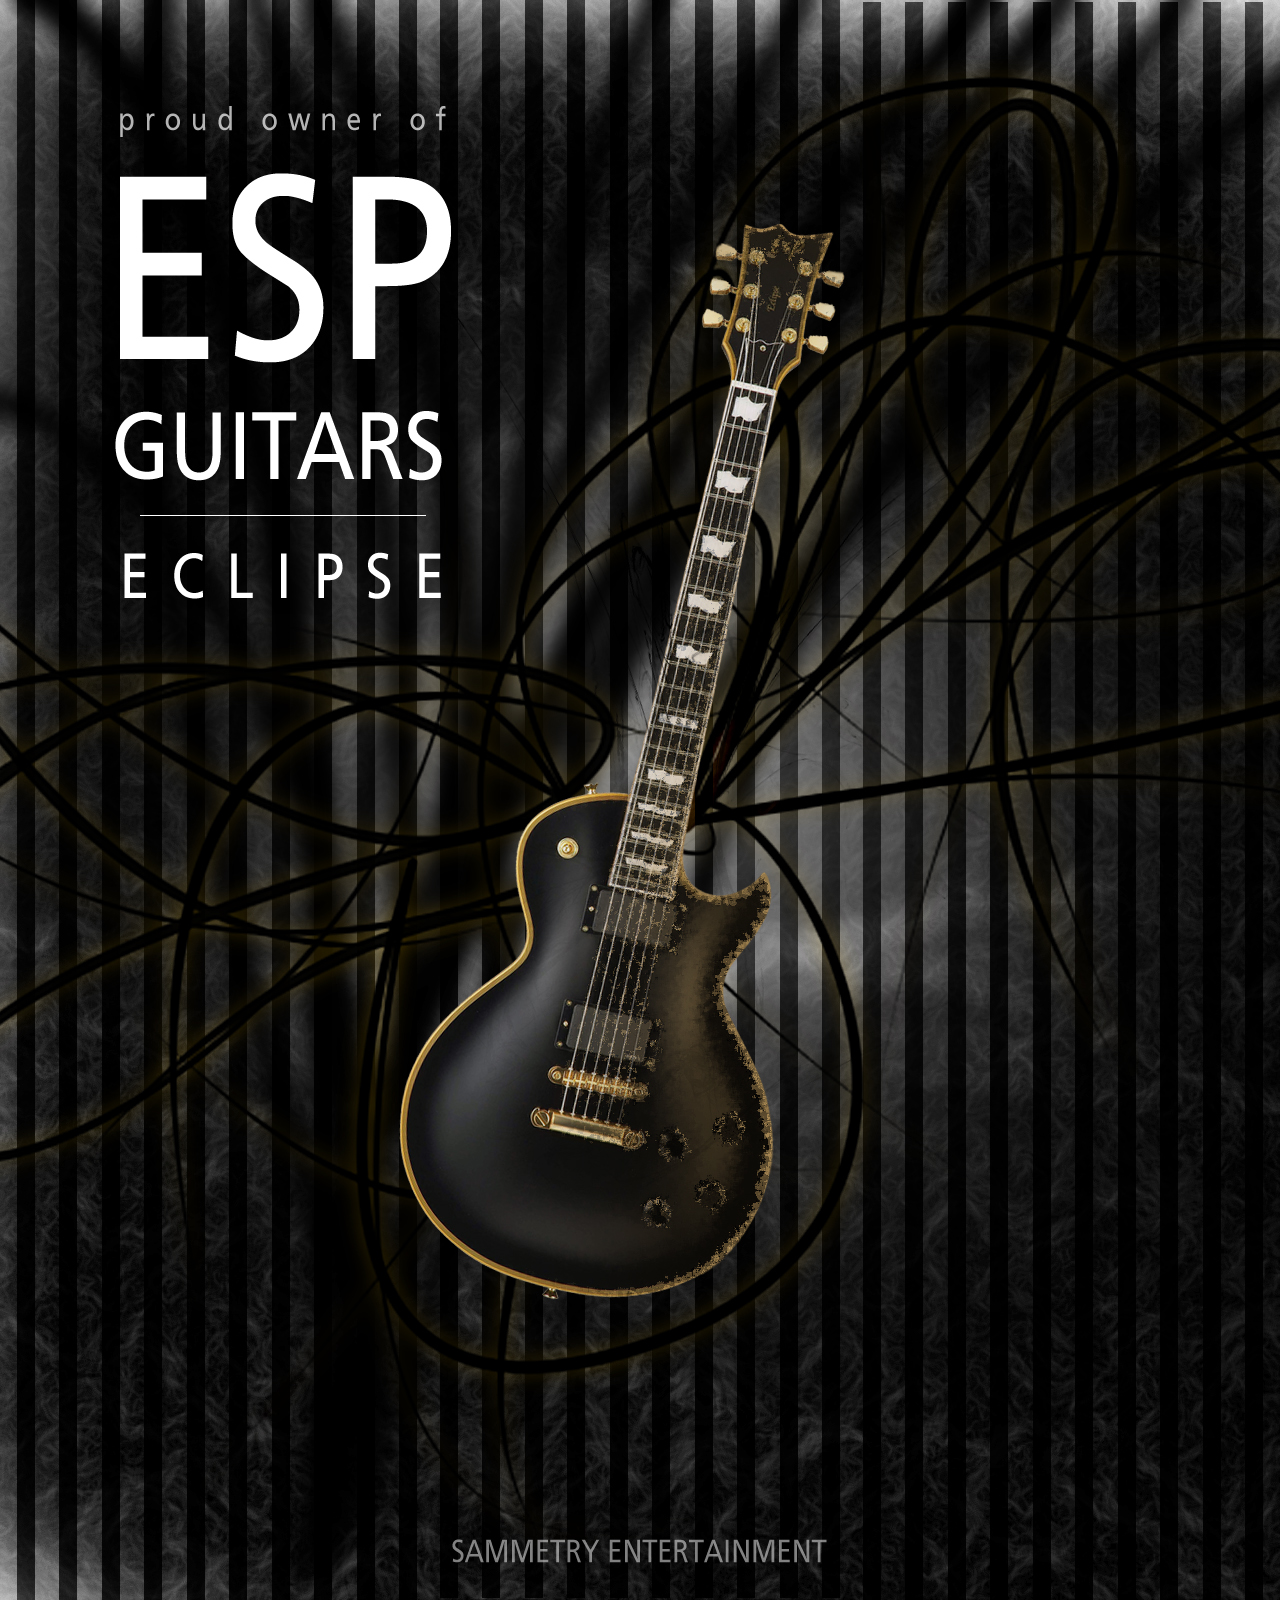 Some Esp Wallpaper P The Guitar Pany